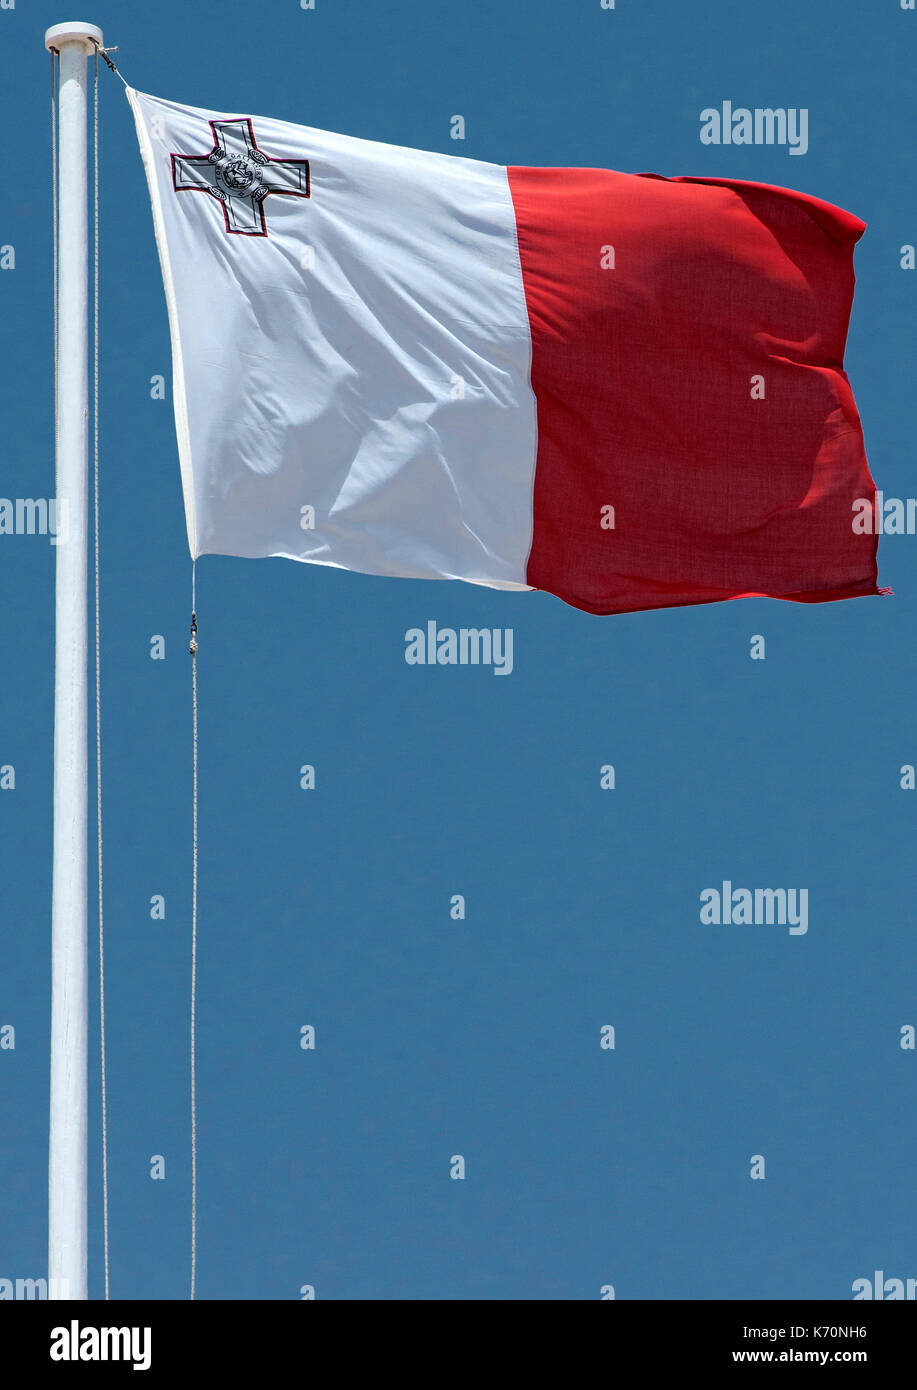 The flag of Malta. Stock Photo